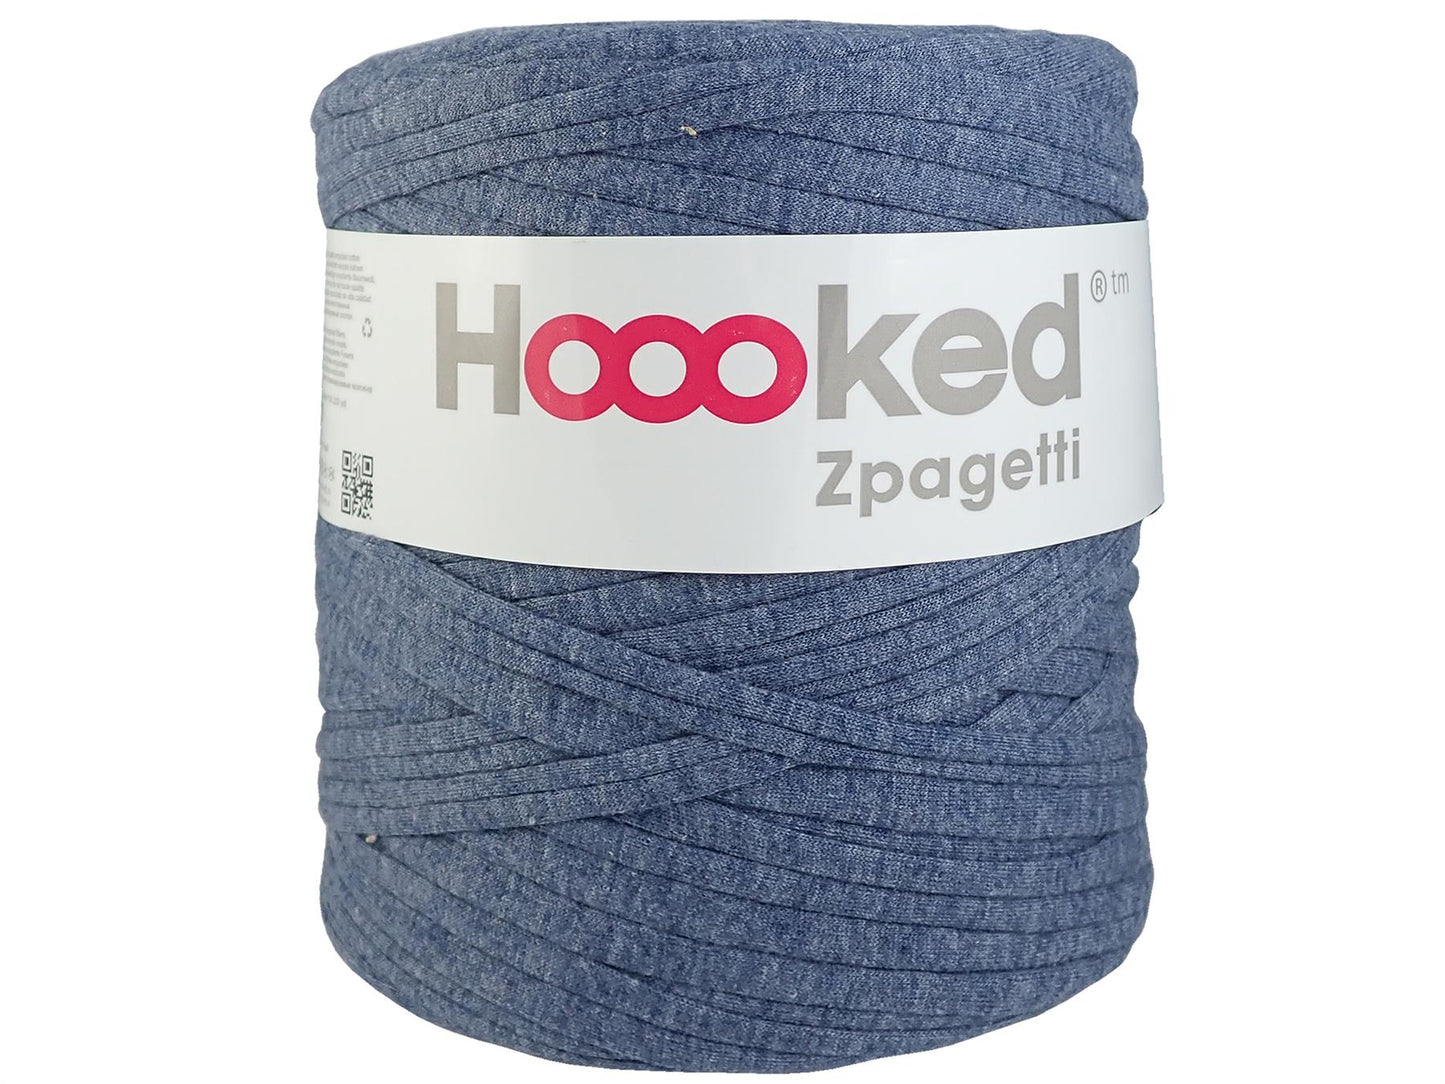 Hoooked Zpagetti Denim Blue Cotton T-Shirt Yarn - 120M 700g